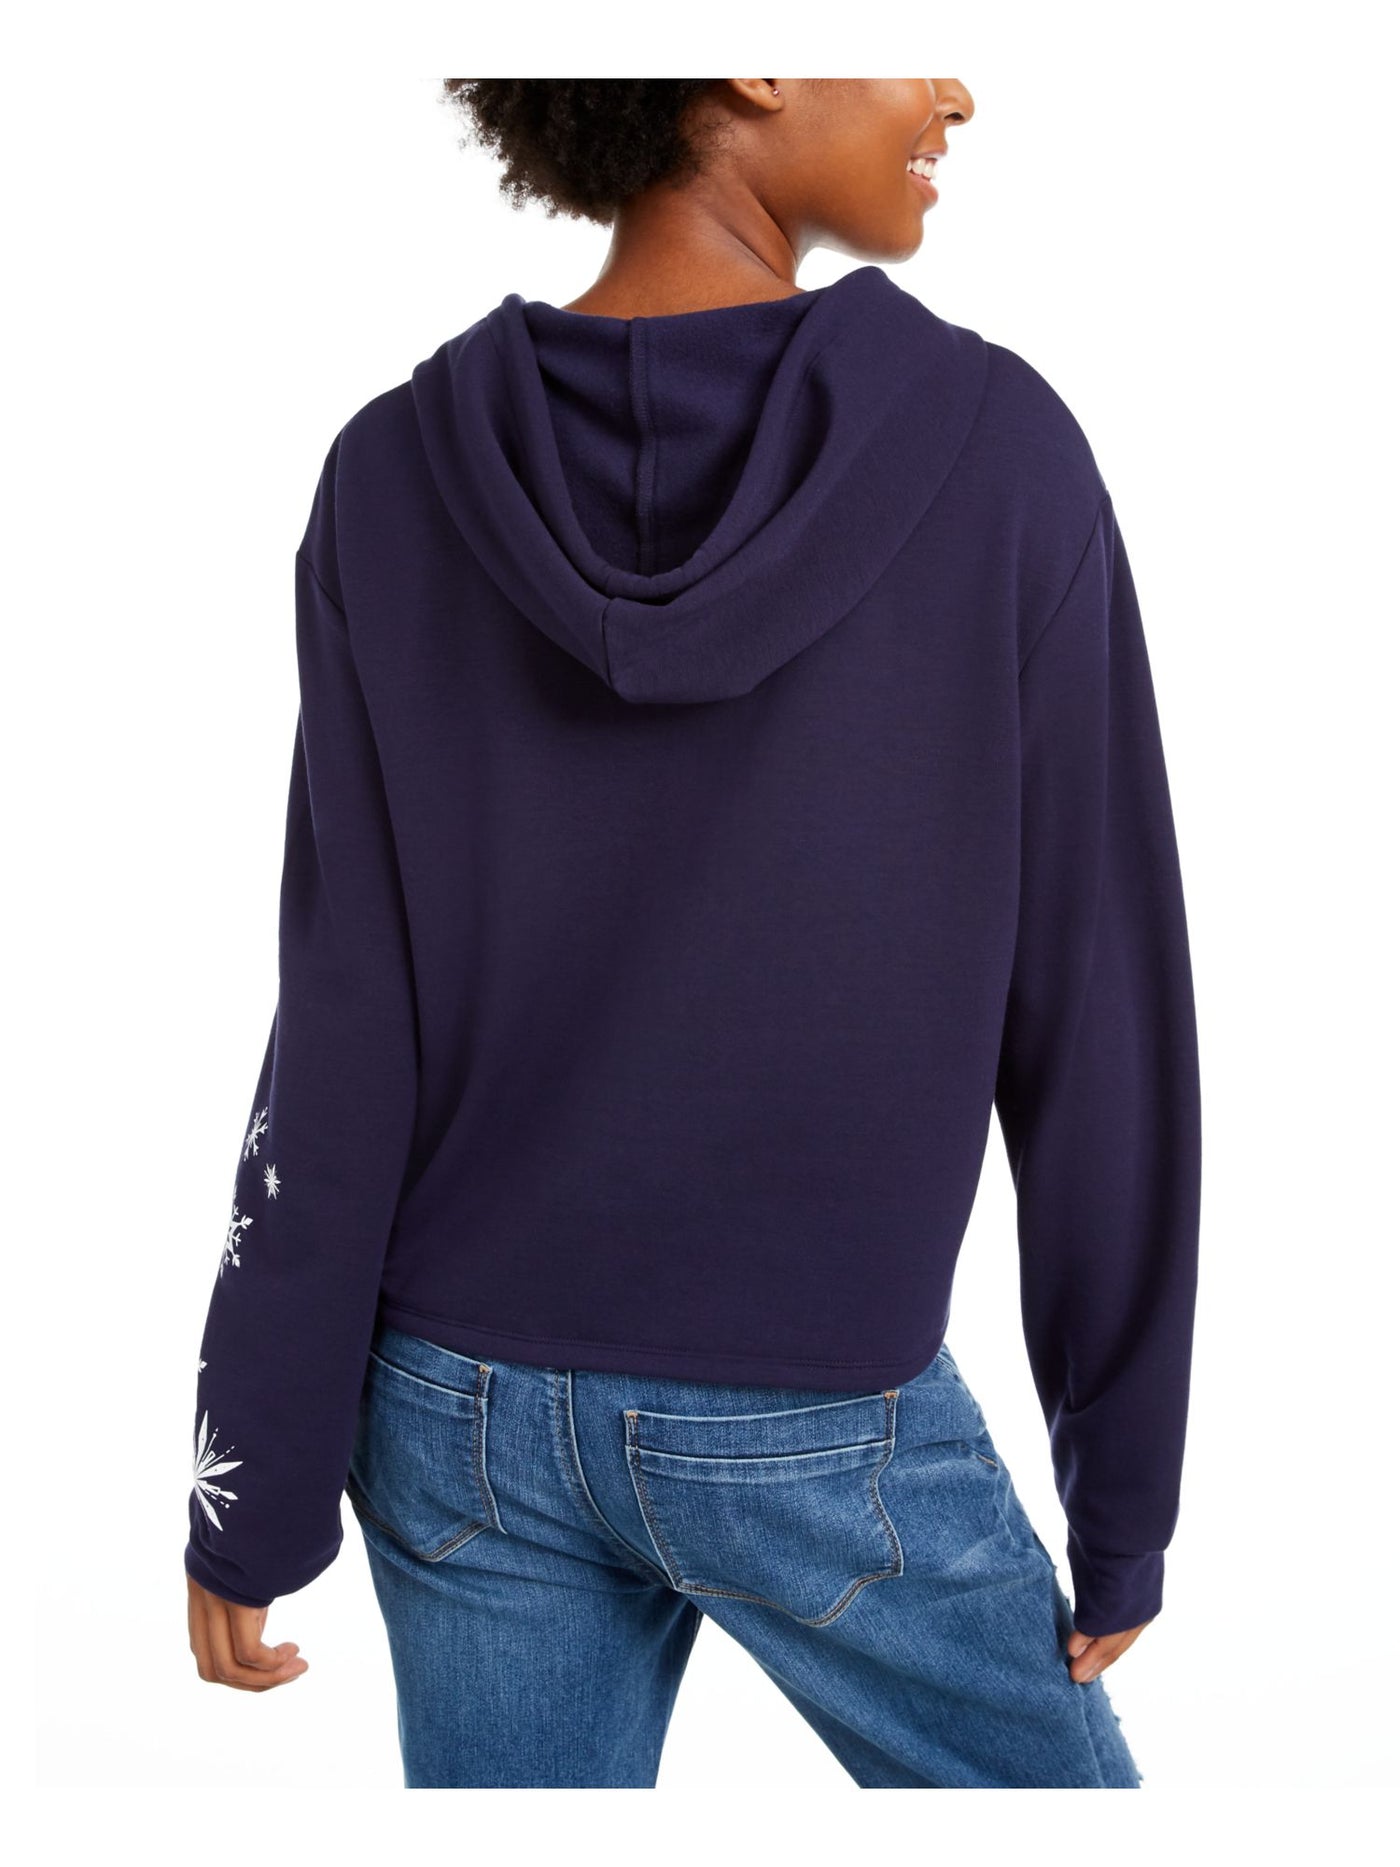 HYBRID APPAREL Womens Navy Cotton Blend Long Sleeve Hoodie Top XS